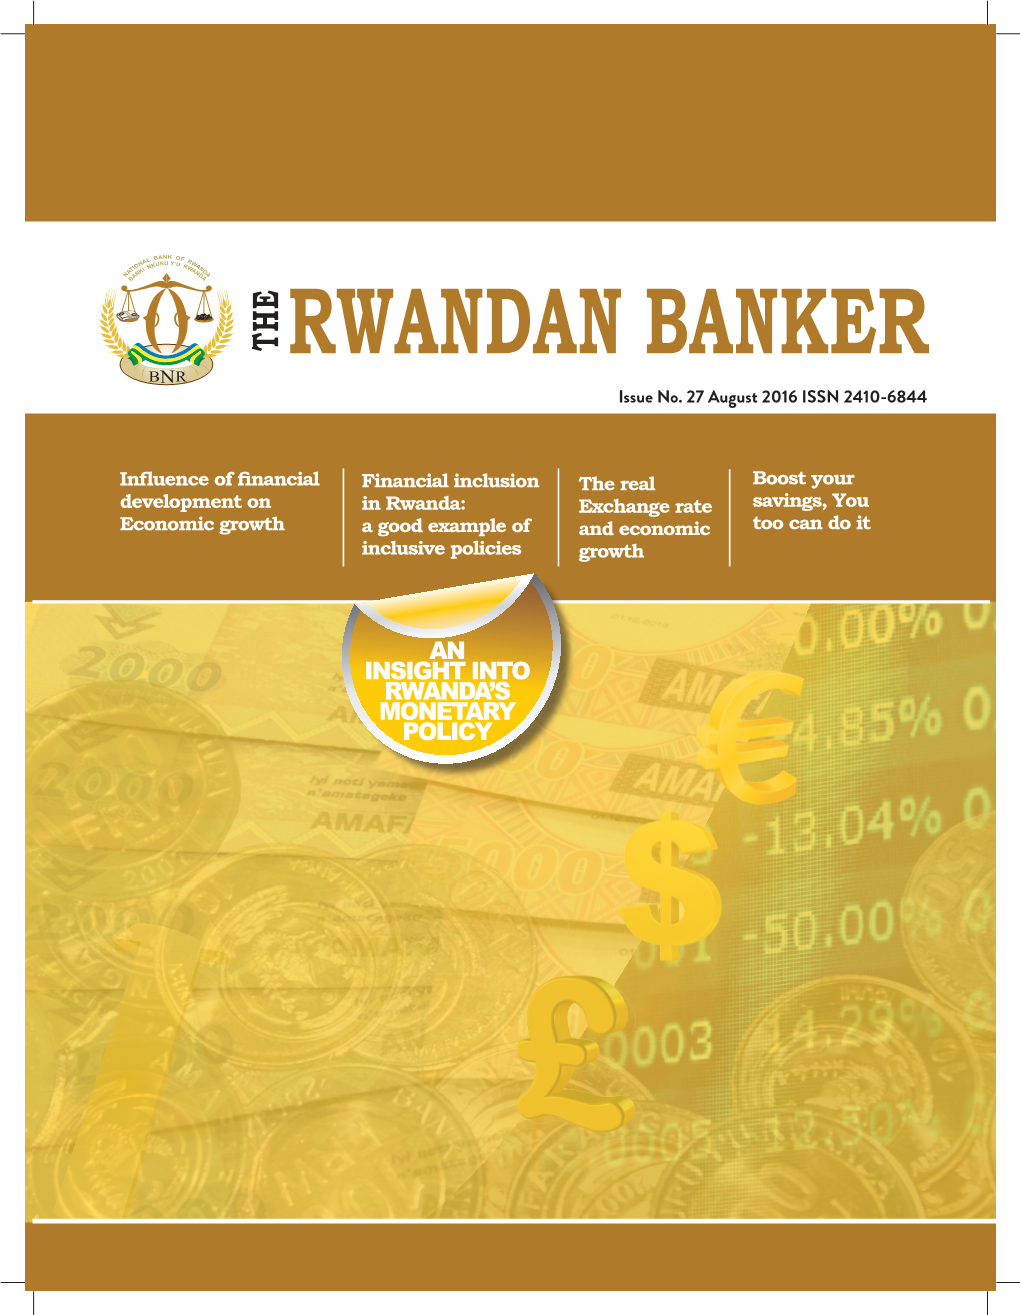 The Rwandan Banker August 2016